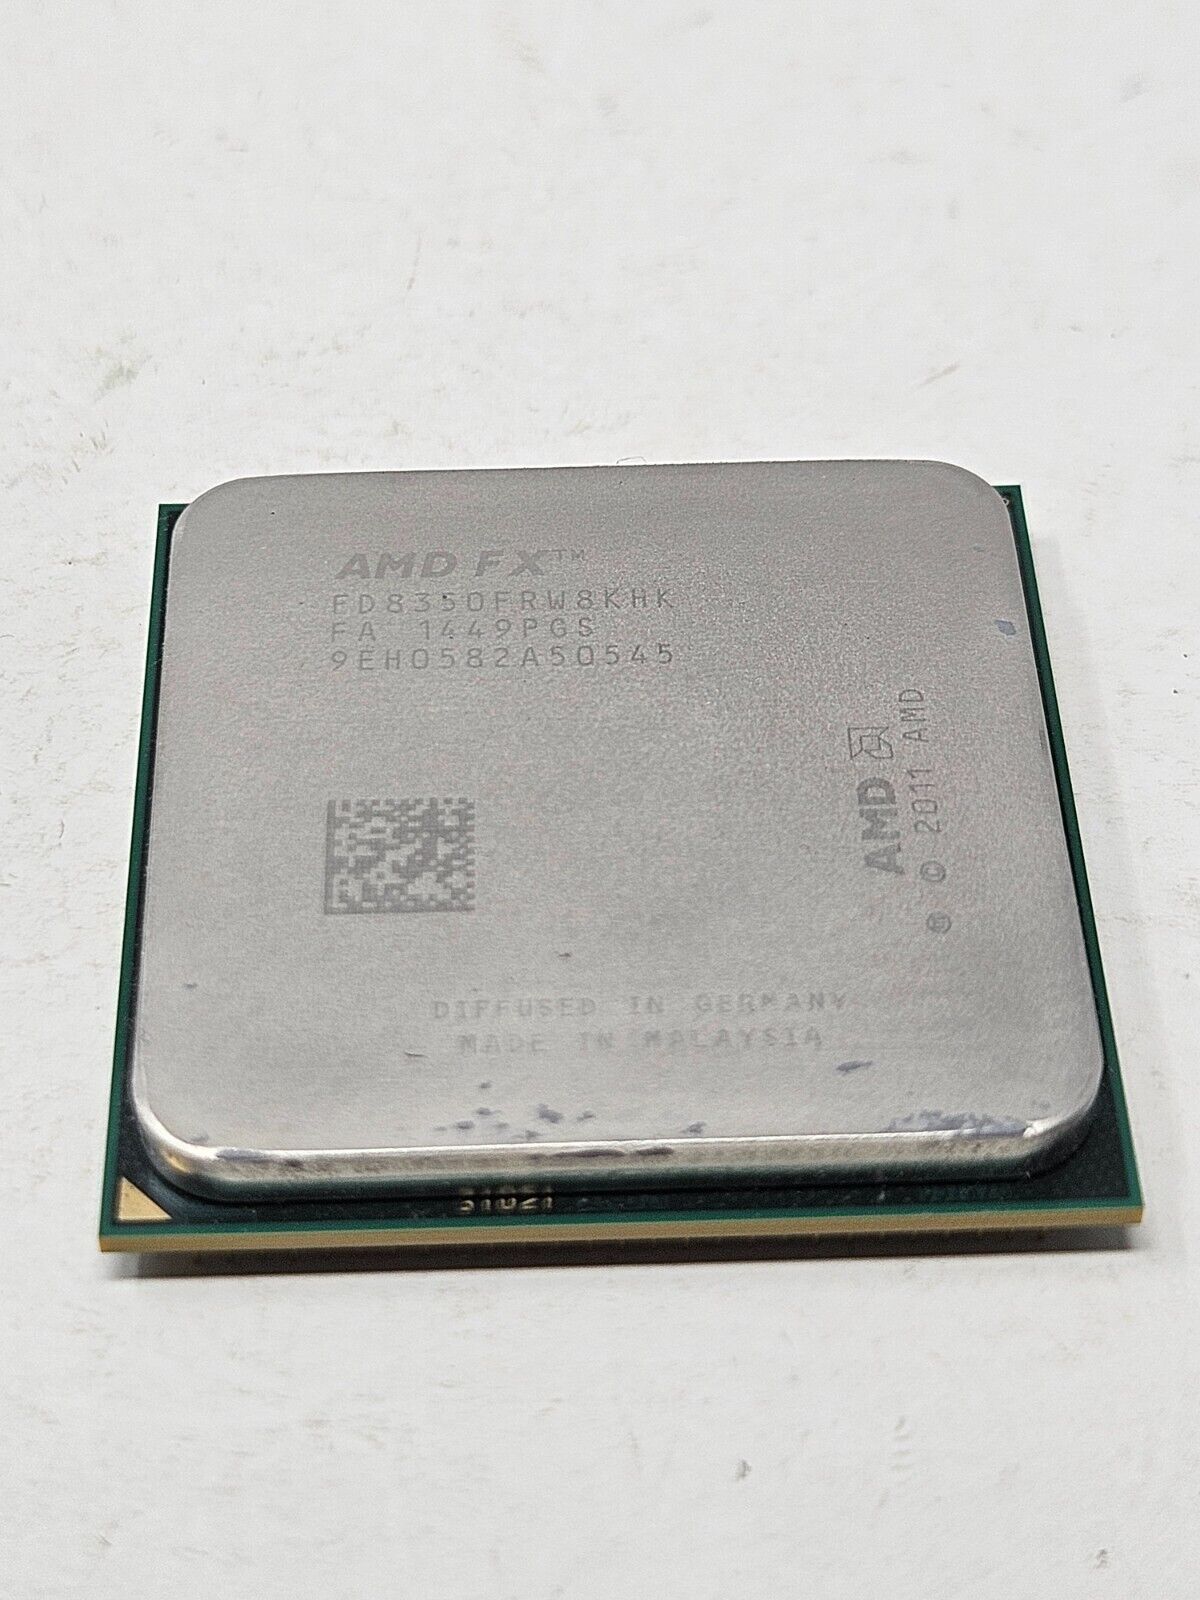 AMD FX-8350 4.0GHz Octa-Core AM3 Processor (FD8350FRW8KHK)